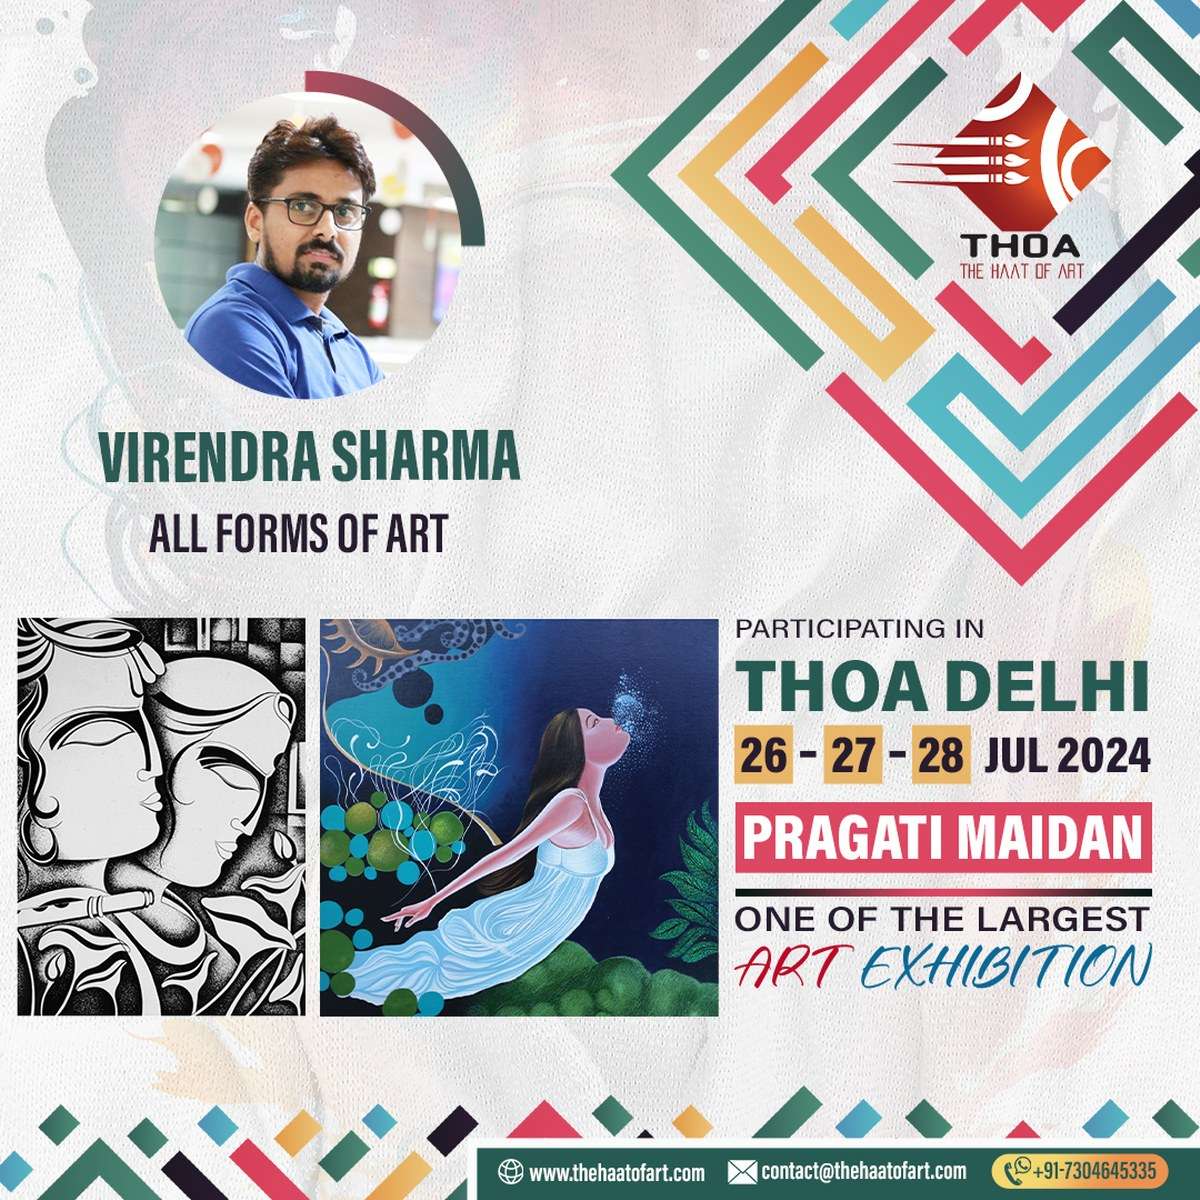 Upcoming Art exhibition in Delhi